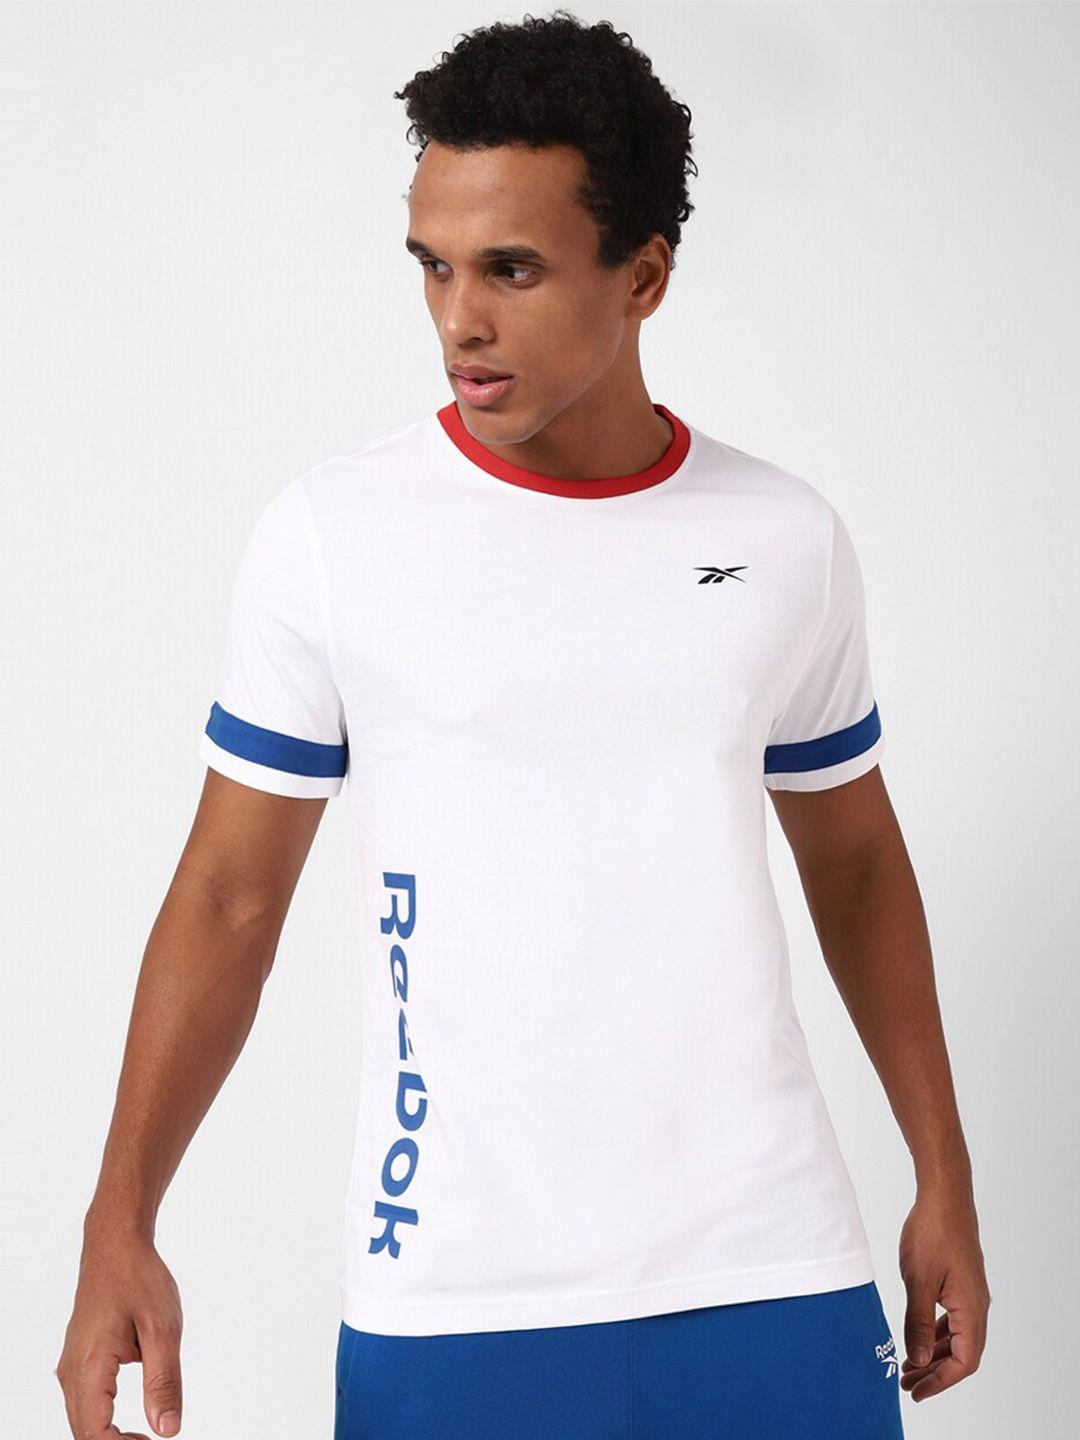 Reebok Wce 2 Brand Logo Printed Pure Cotton Slim-Fit T-Shirt